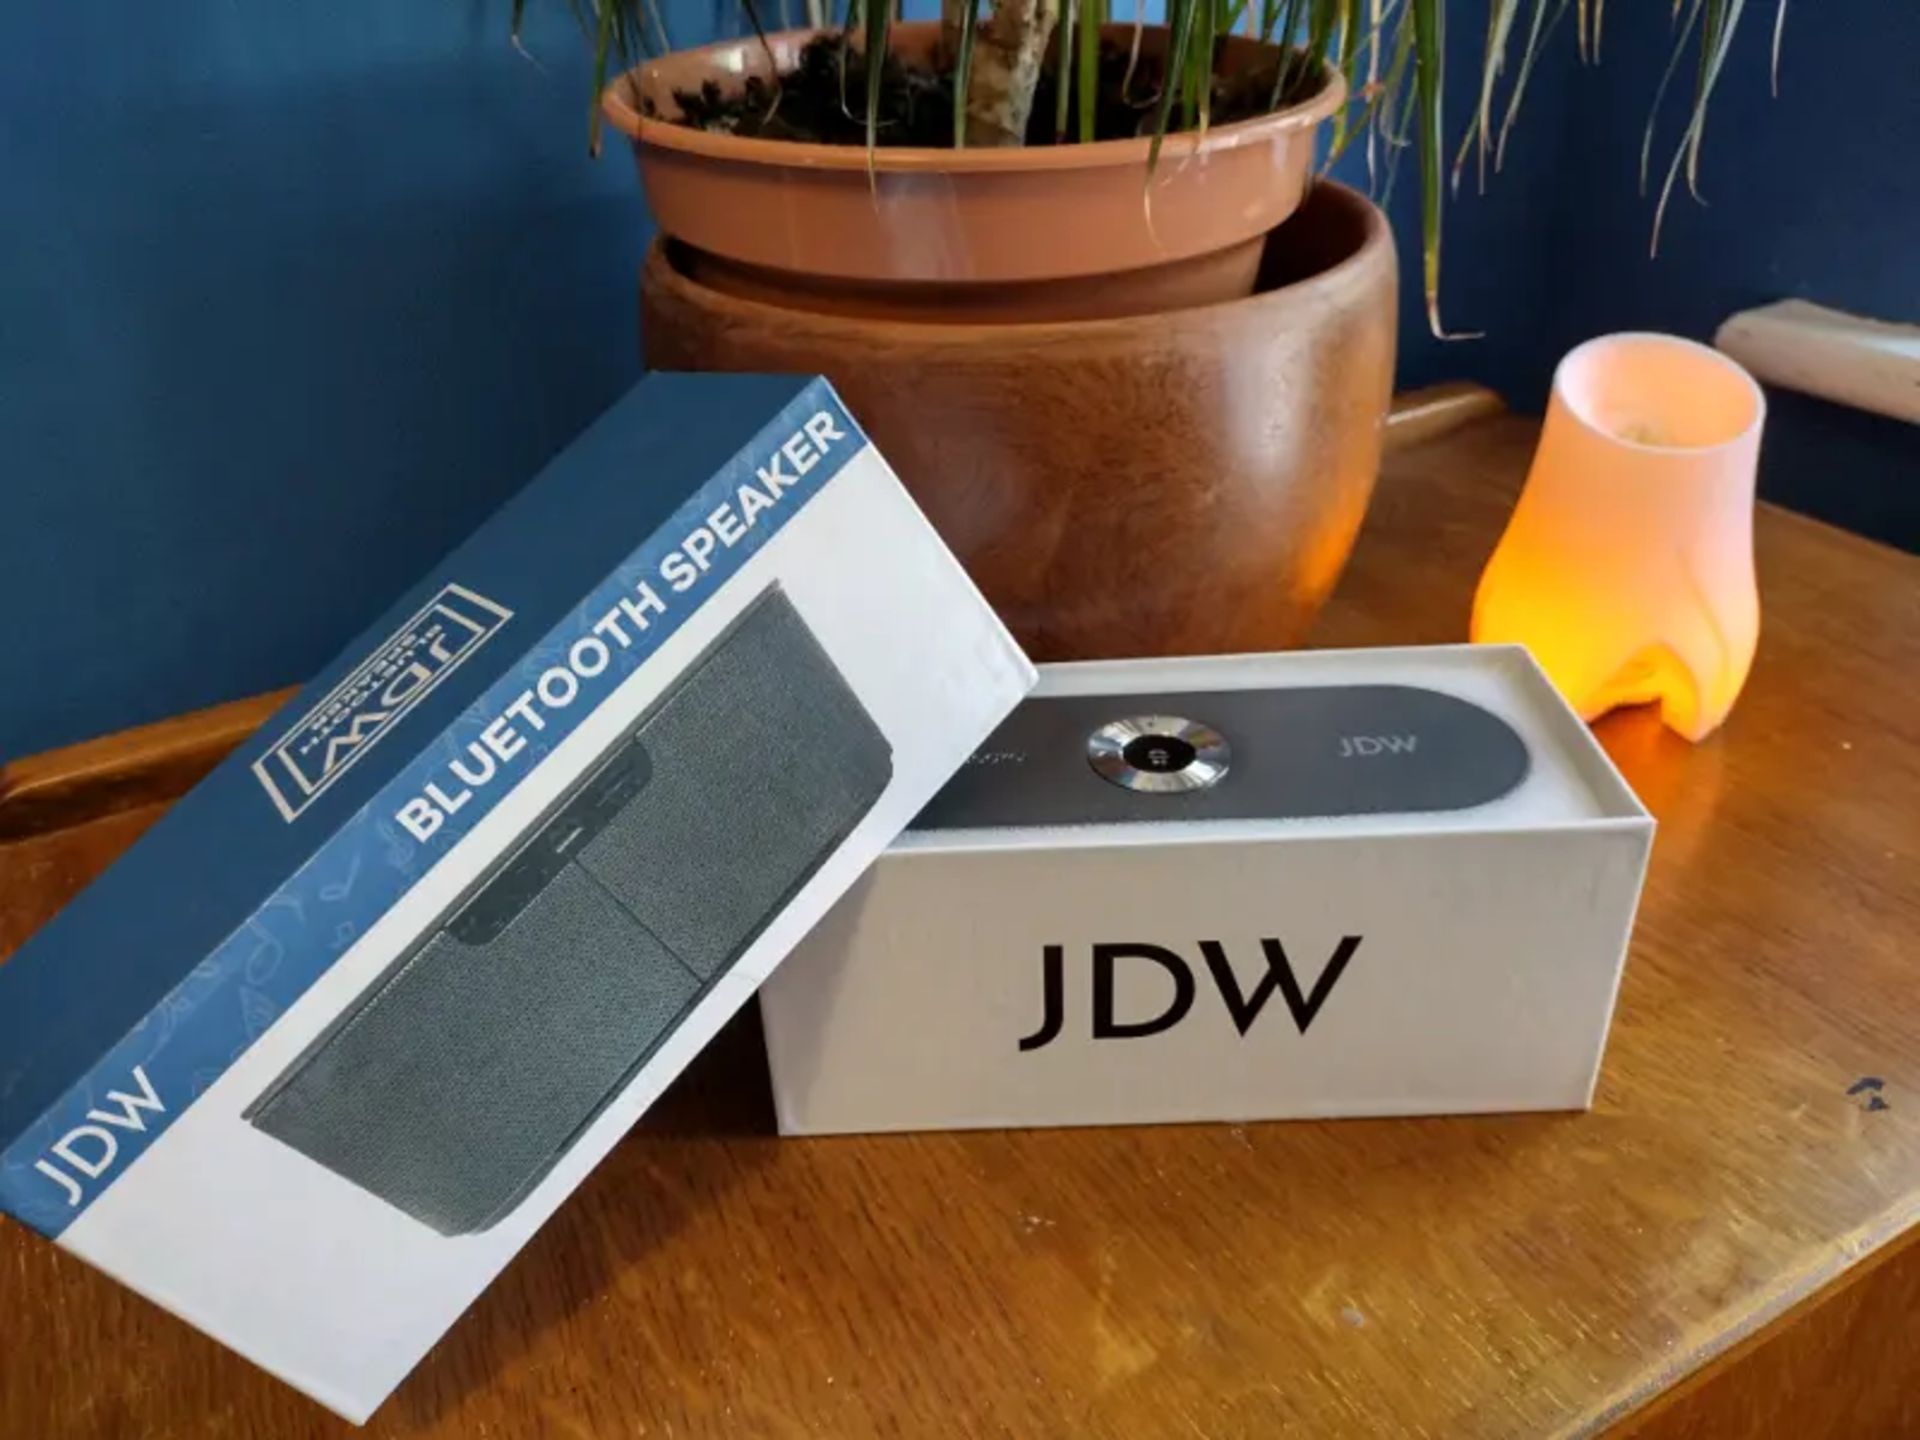 JDW Bluetooth Speaker - Image 2 of 2